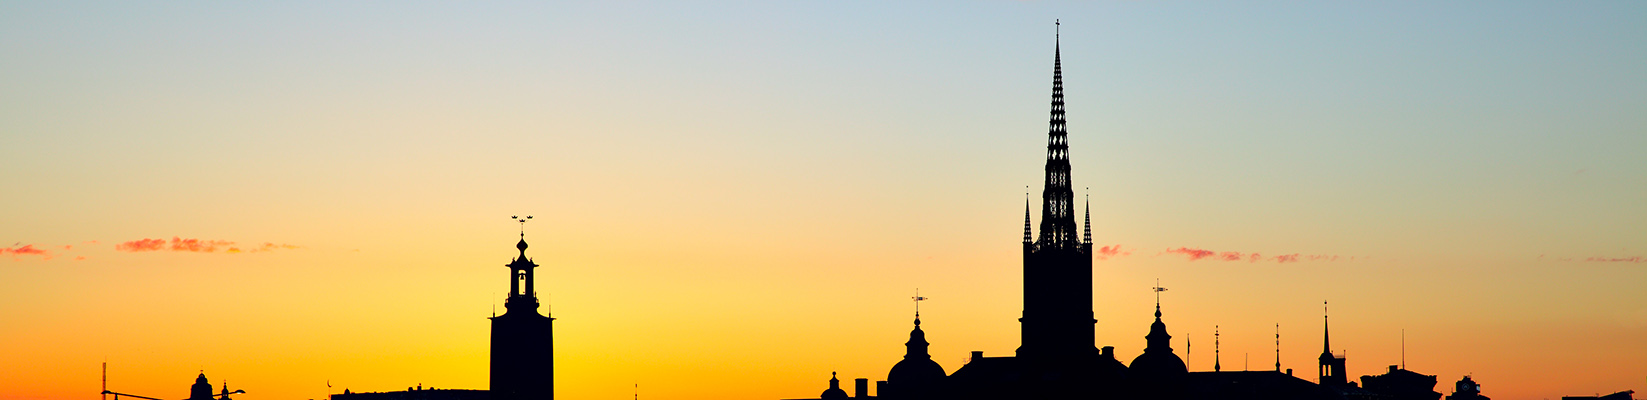 Stockholm at sunset